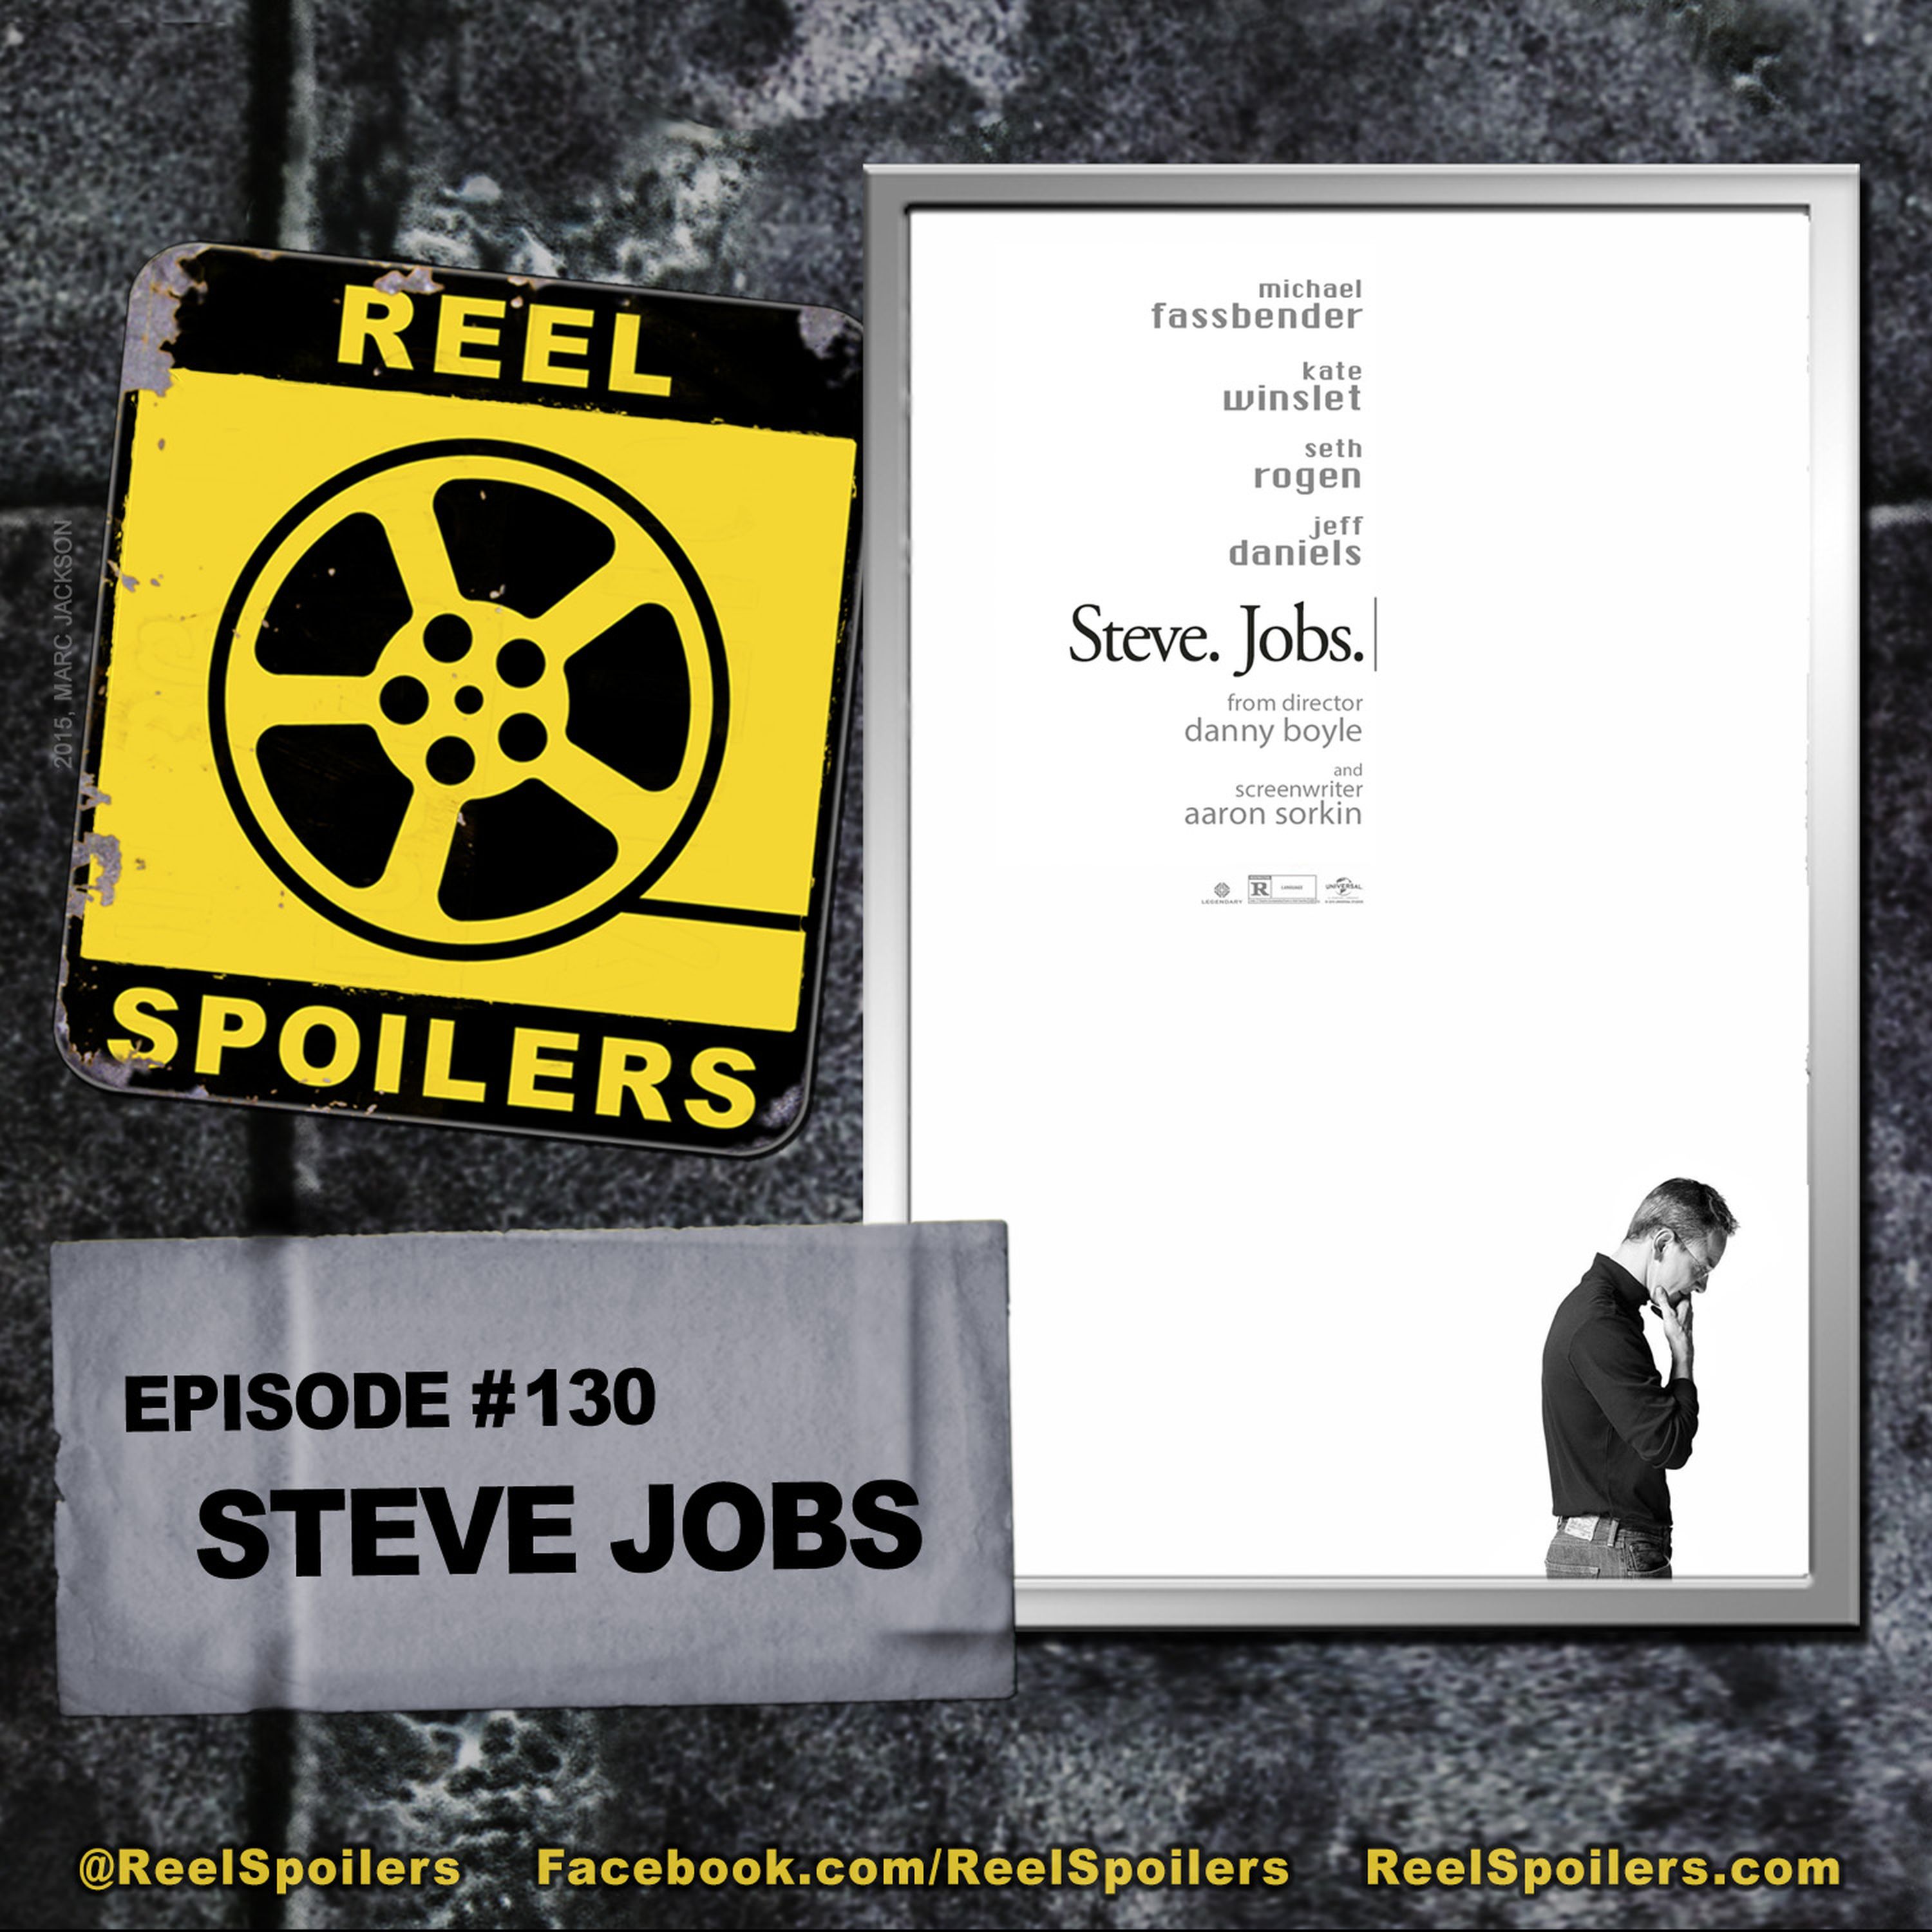 130: 'Steve Jobs' Starring Michael Fassbender, Kate Winslet, Seth Rogen, Jeff Daniels Image